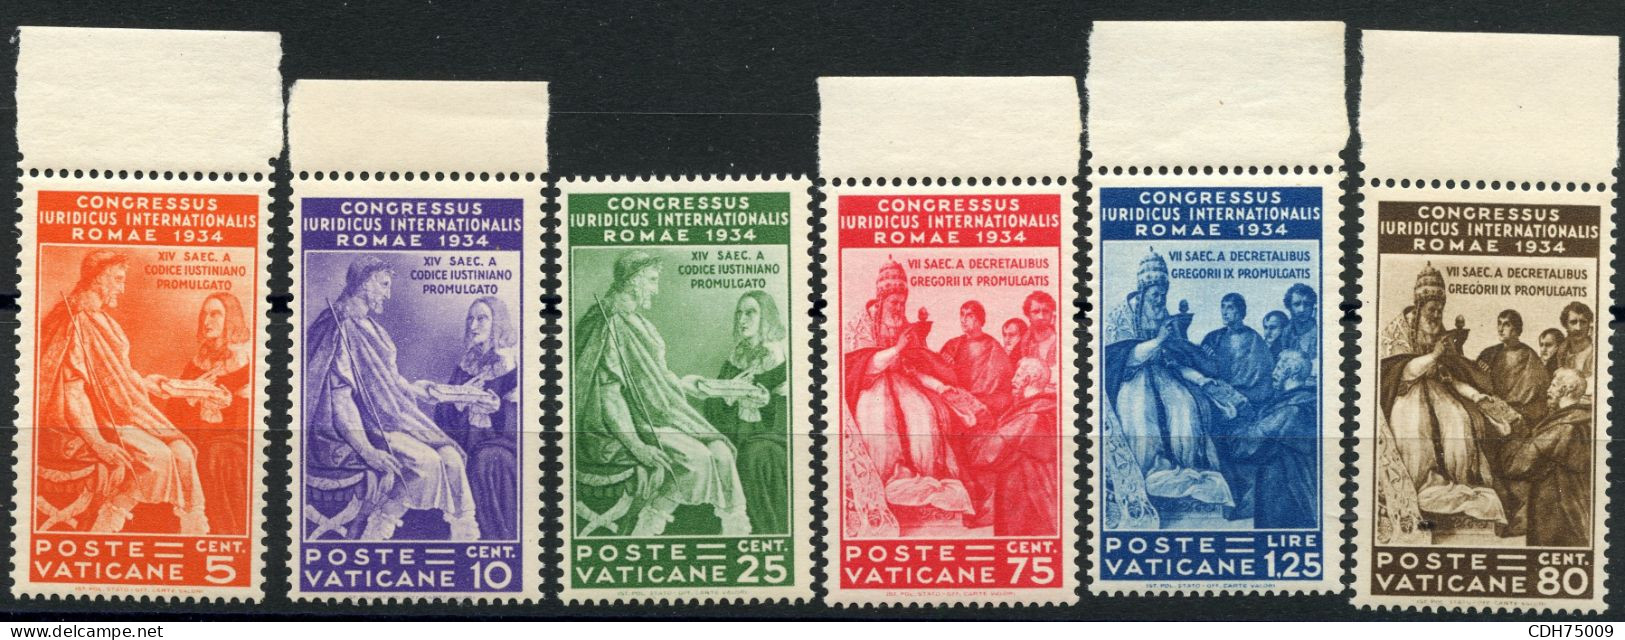 VATICAN - S 41 / 46 CONGRESSO GIURIDICO ** - Unused Stamps